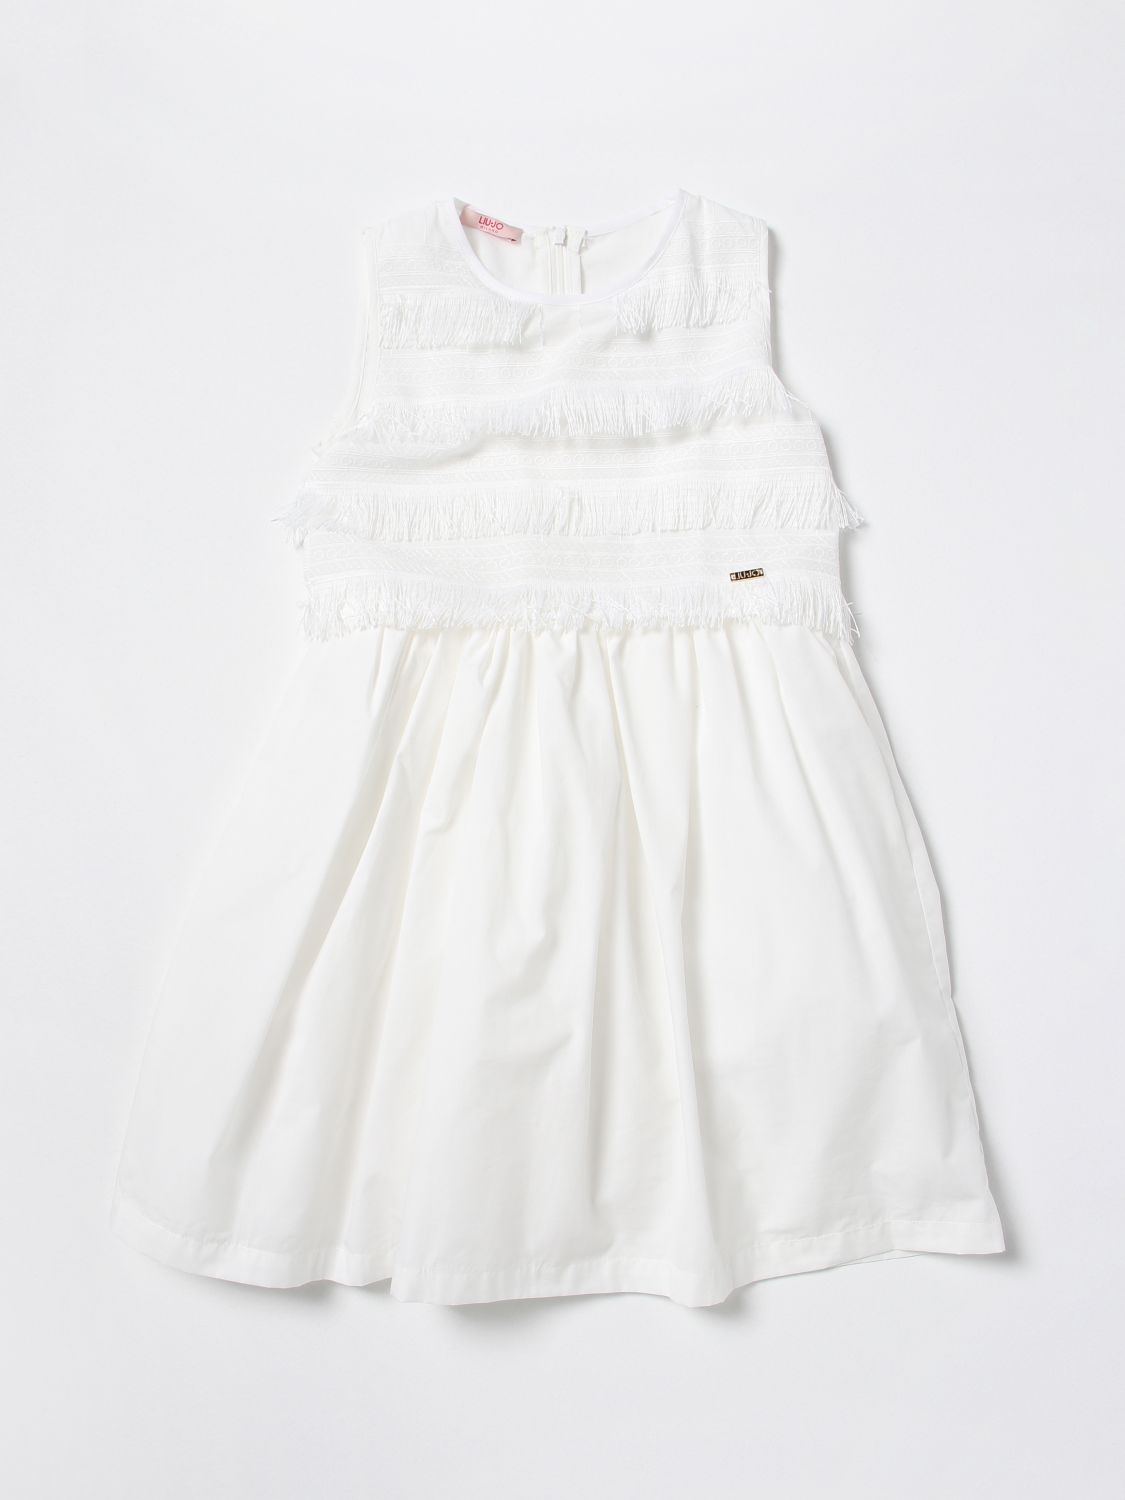 LIU JO KIDS: dress for girls - White | Liu Jo Kids dress GA3232T3358 ...